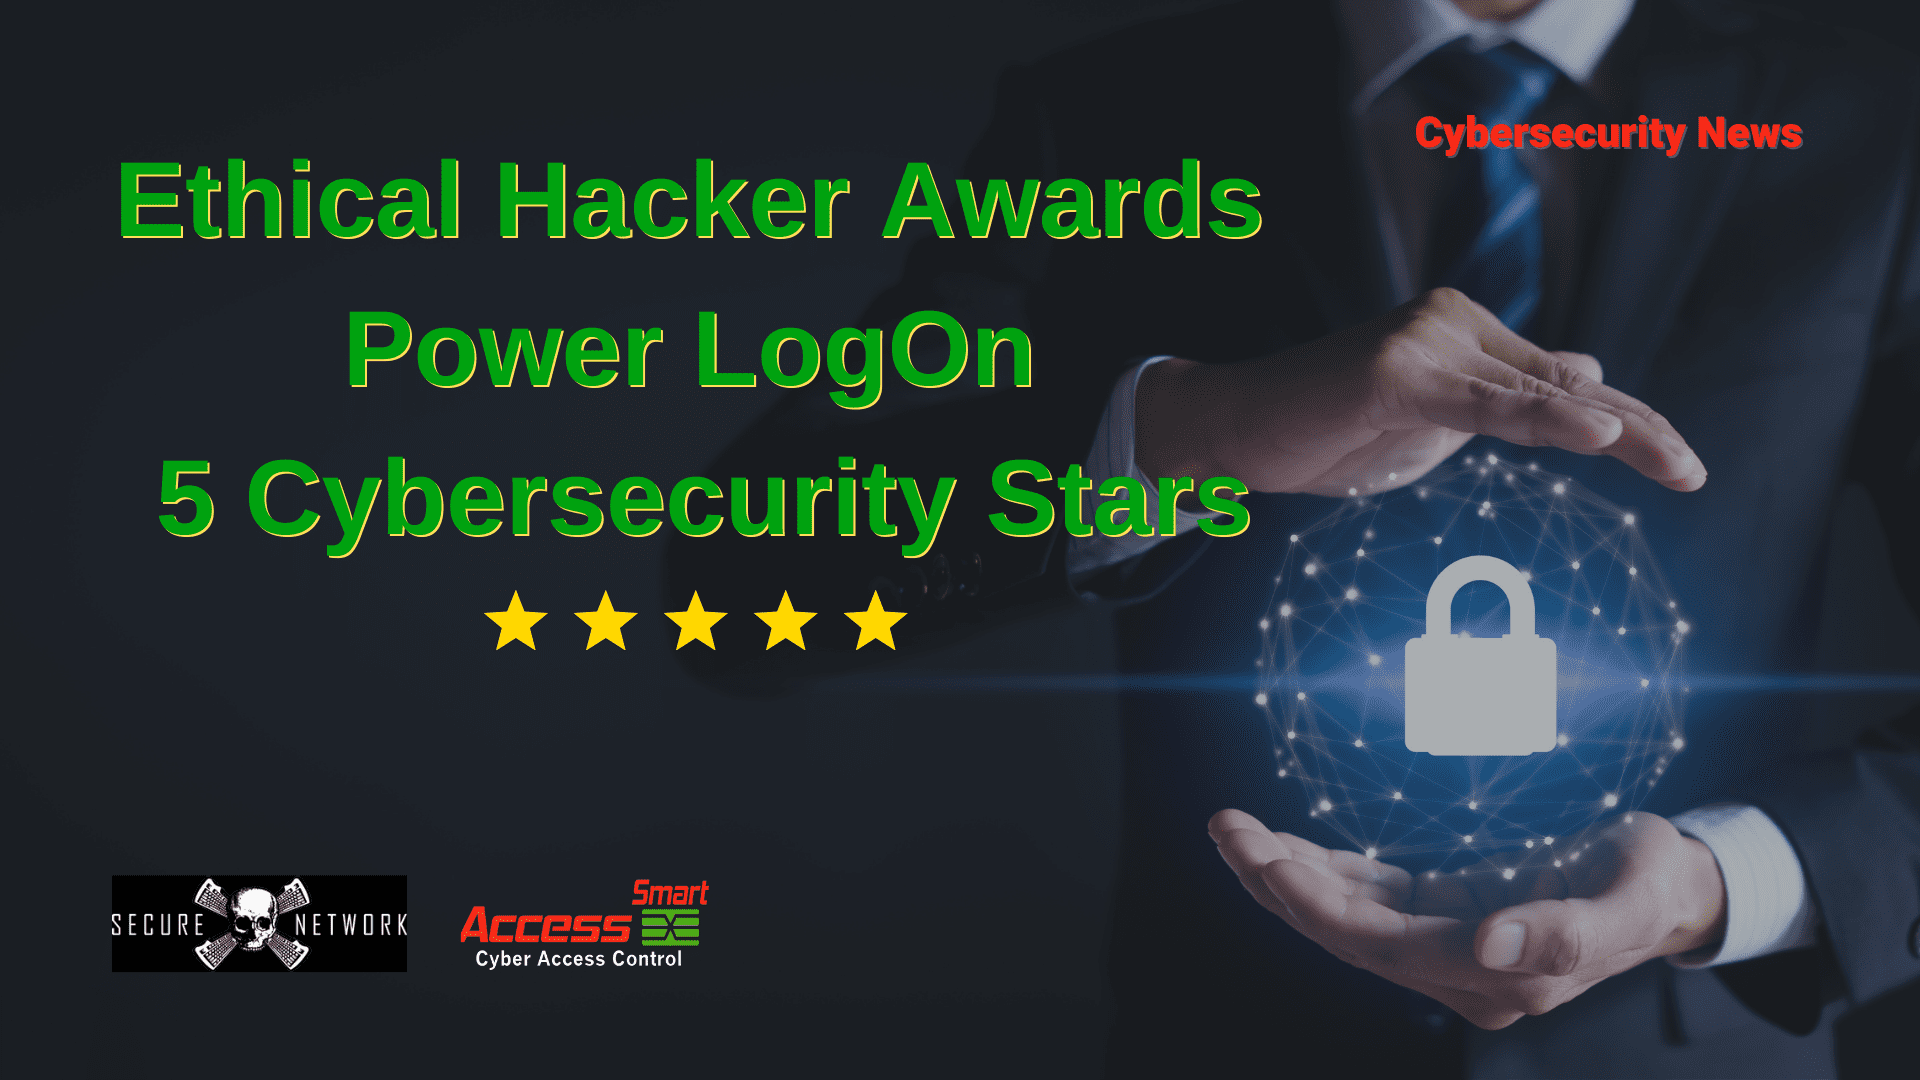 Dovell dicusses cybersecurity's weakest link - Passwords